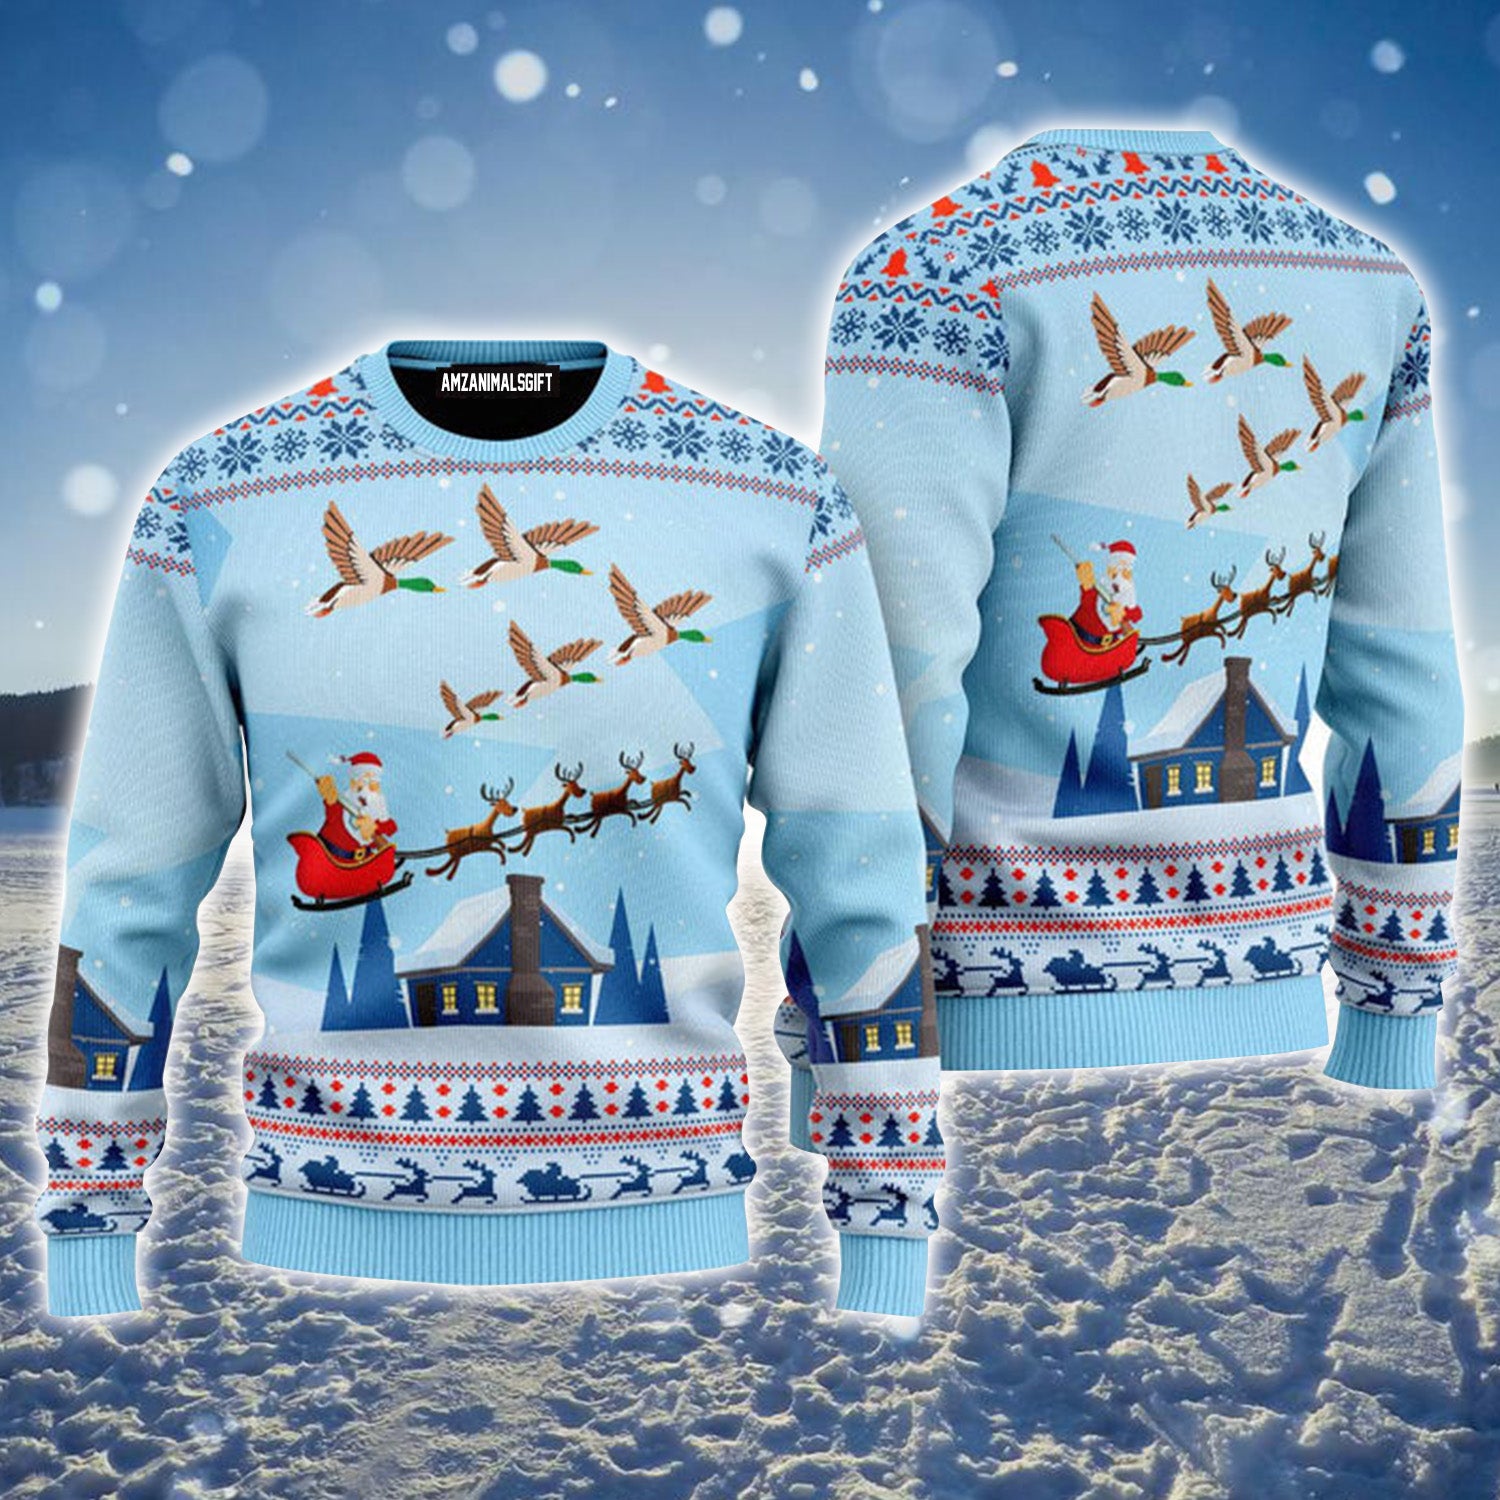 Duck Hunting Urly Christmas Sweater, Christmas Sweater For Men & Women - Perfect Gift For Christmas, Hunting Lovers, Hunters